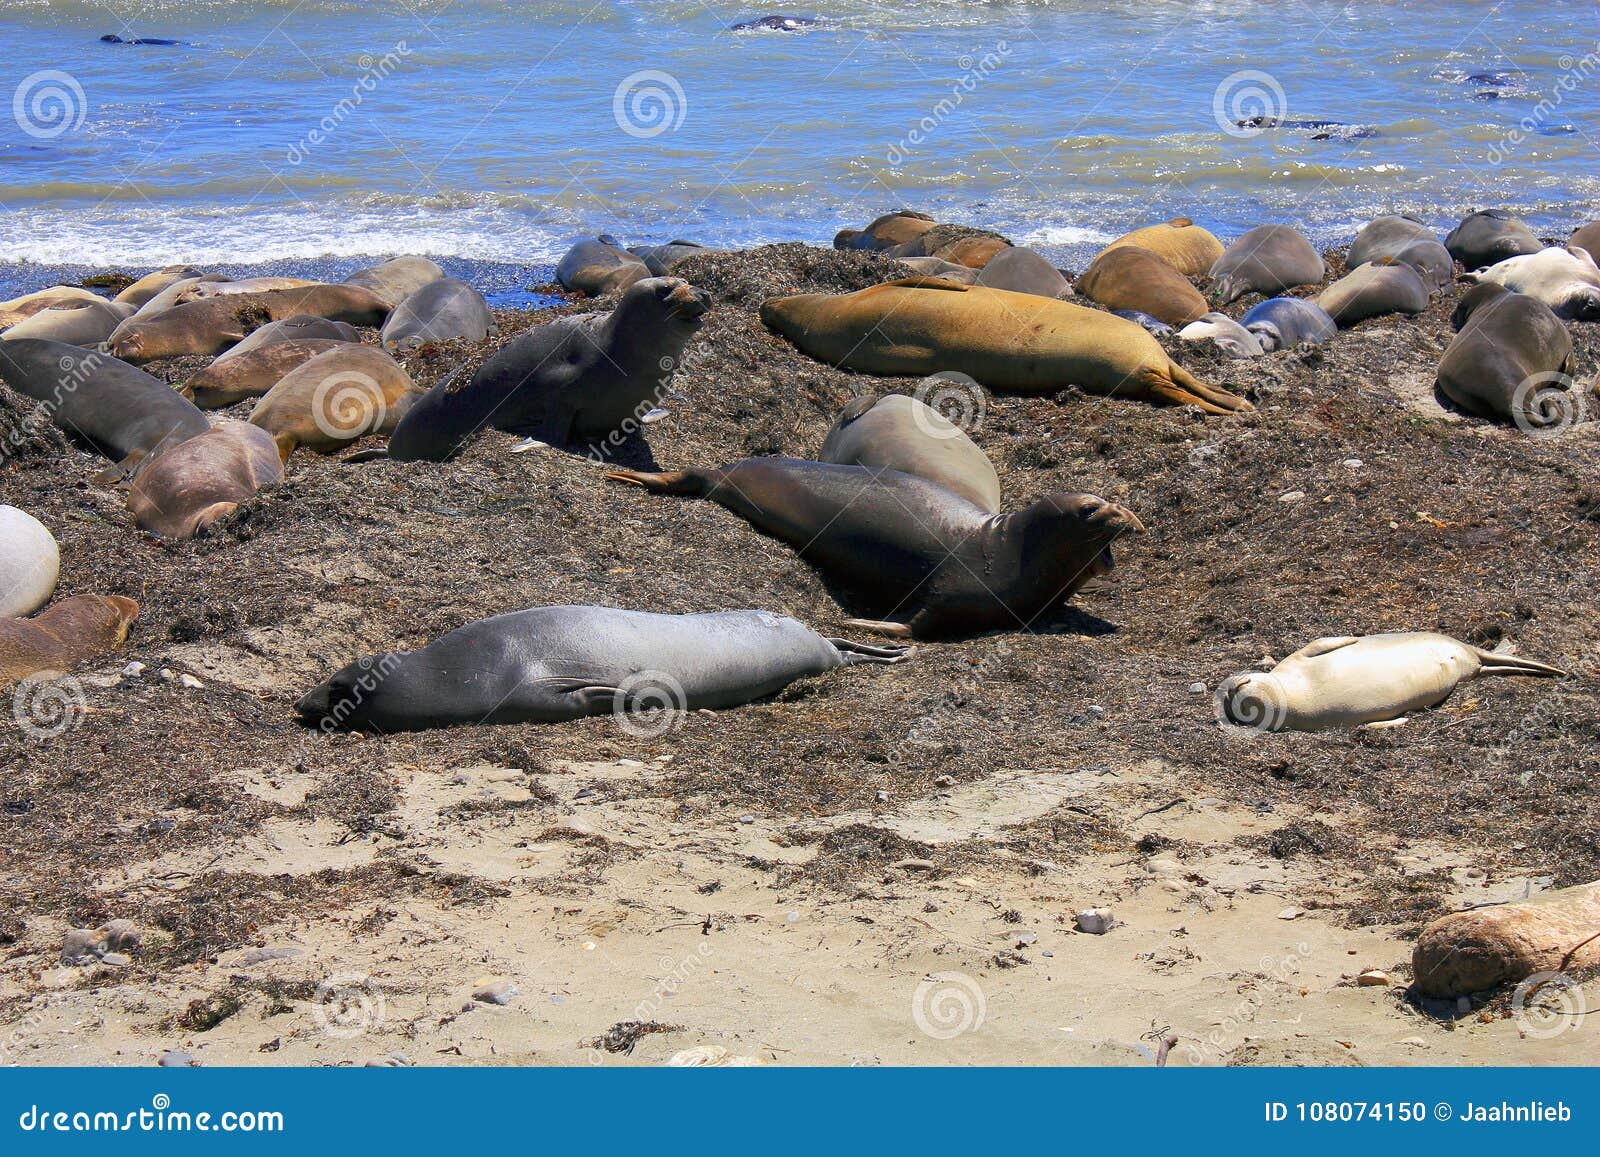 elephant seals, mirounga angustirostris, ano nuevo state park, pacific coast, california